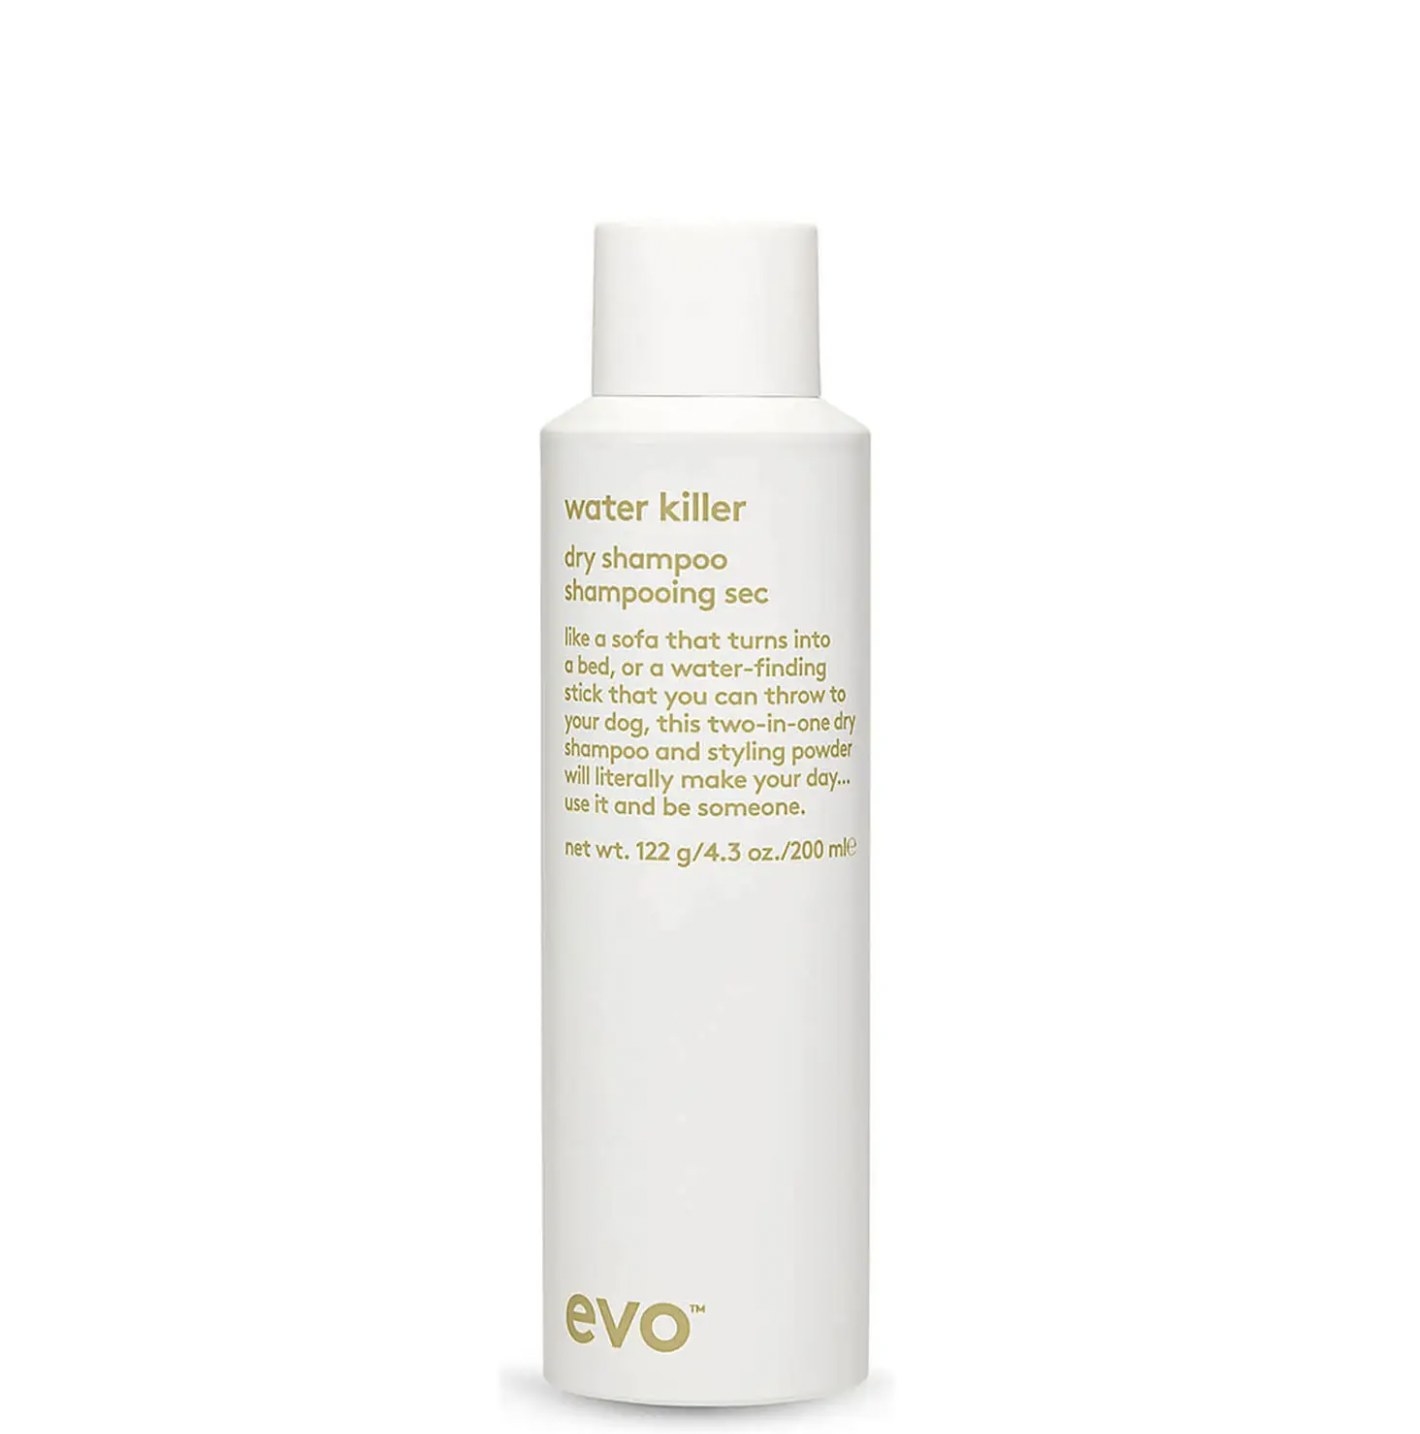 The evo water killer dry shampoo